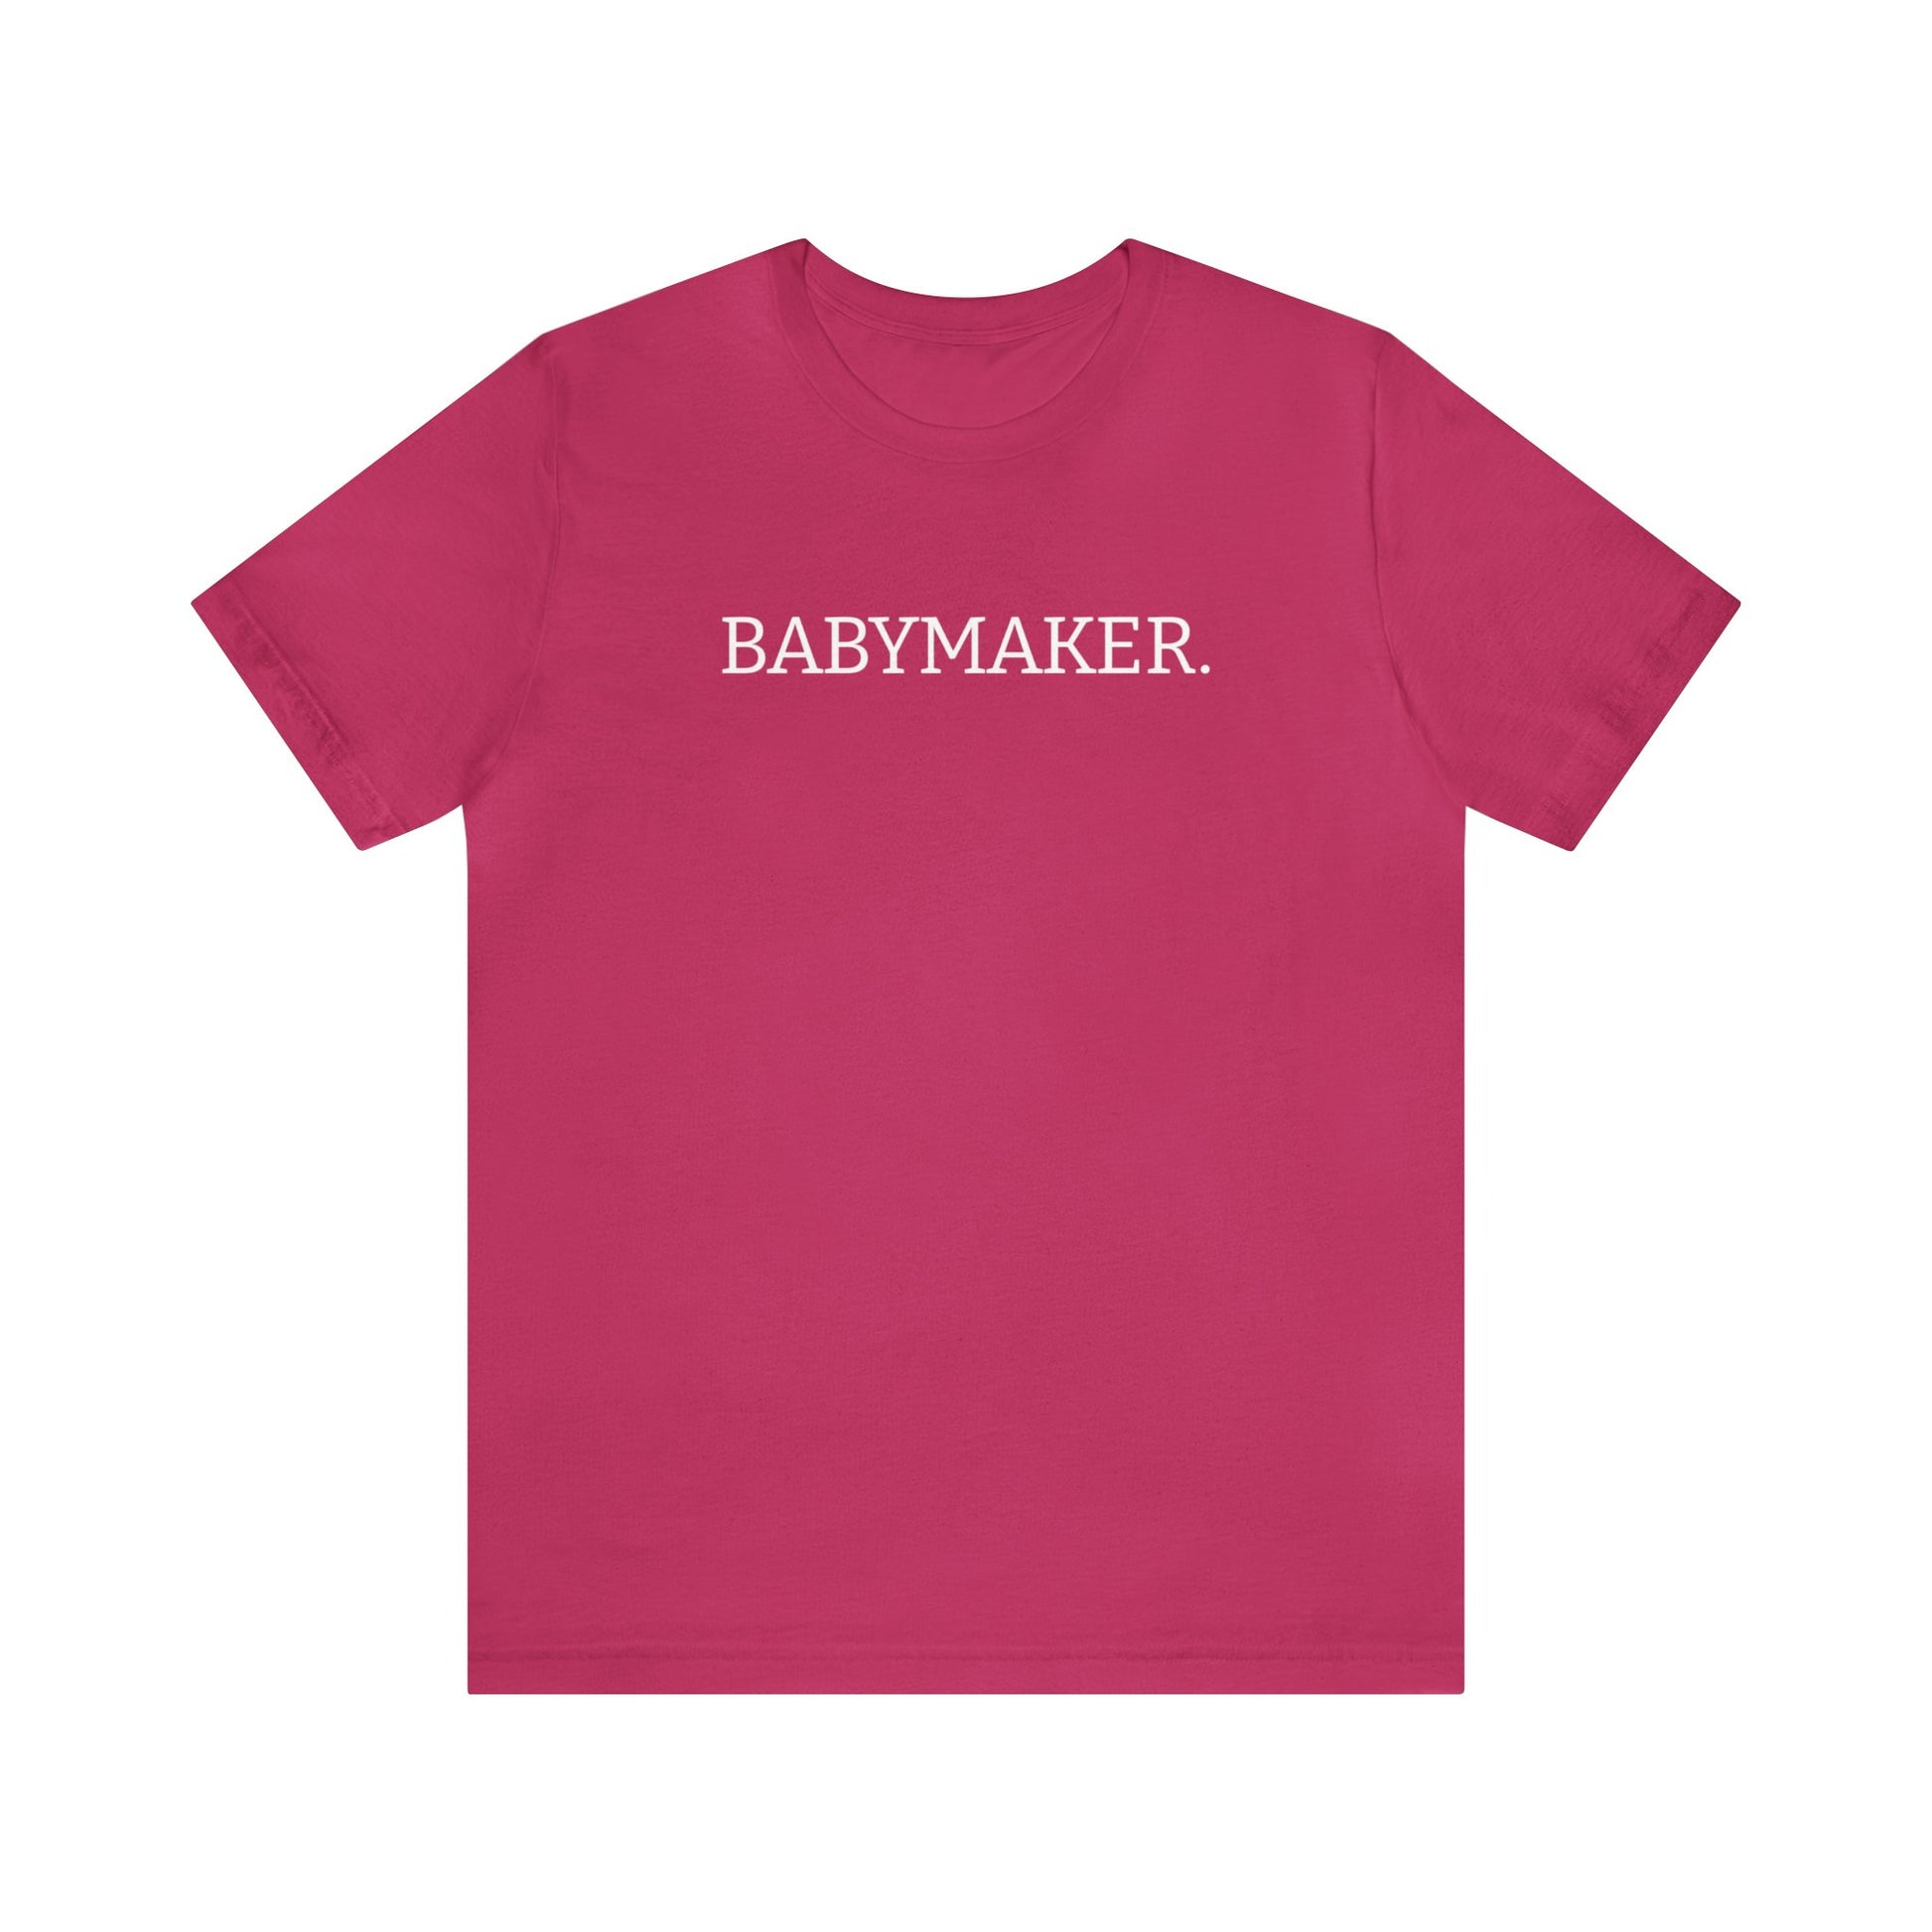 BABYMAKER Unisex T-shirt in Berry